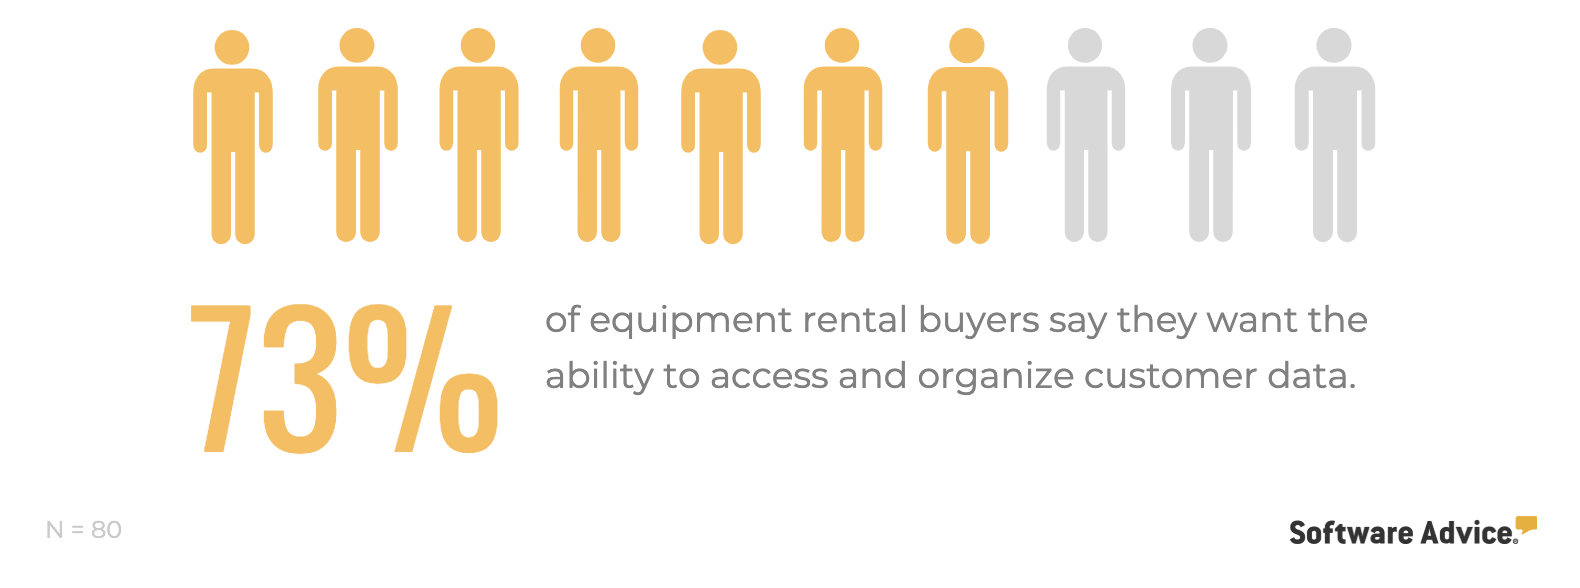 equipment-rental-software-buyers-customer-data-access